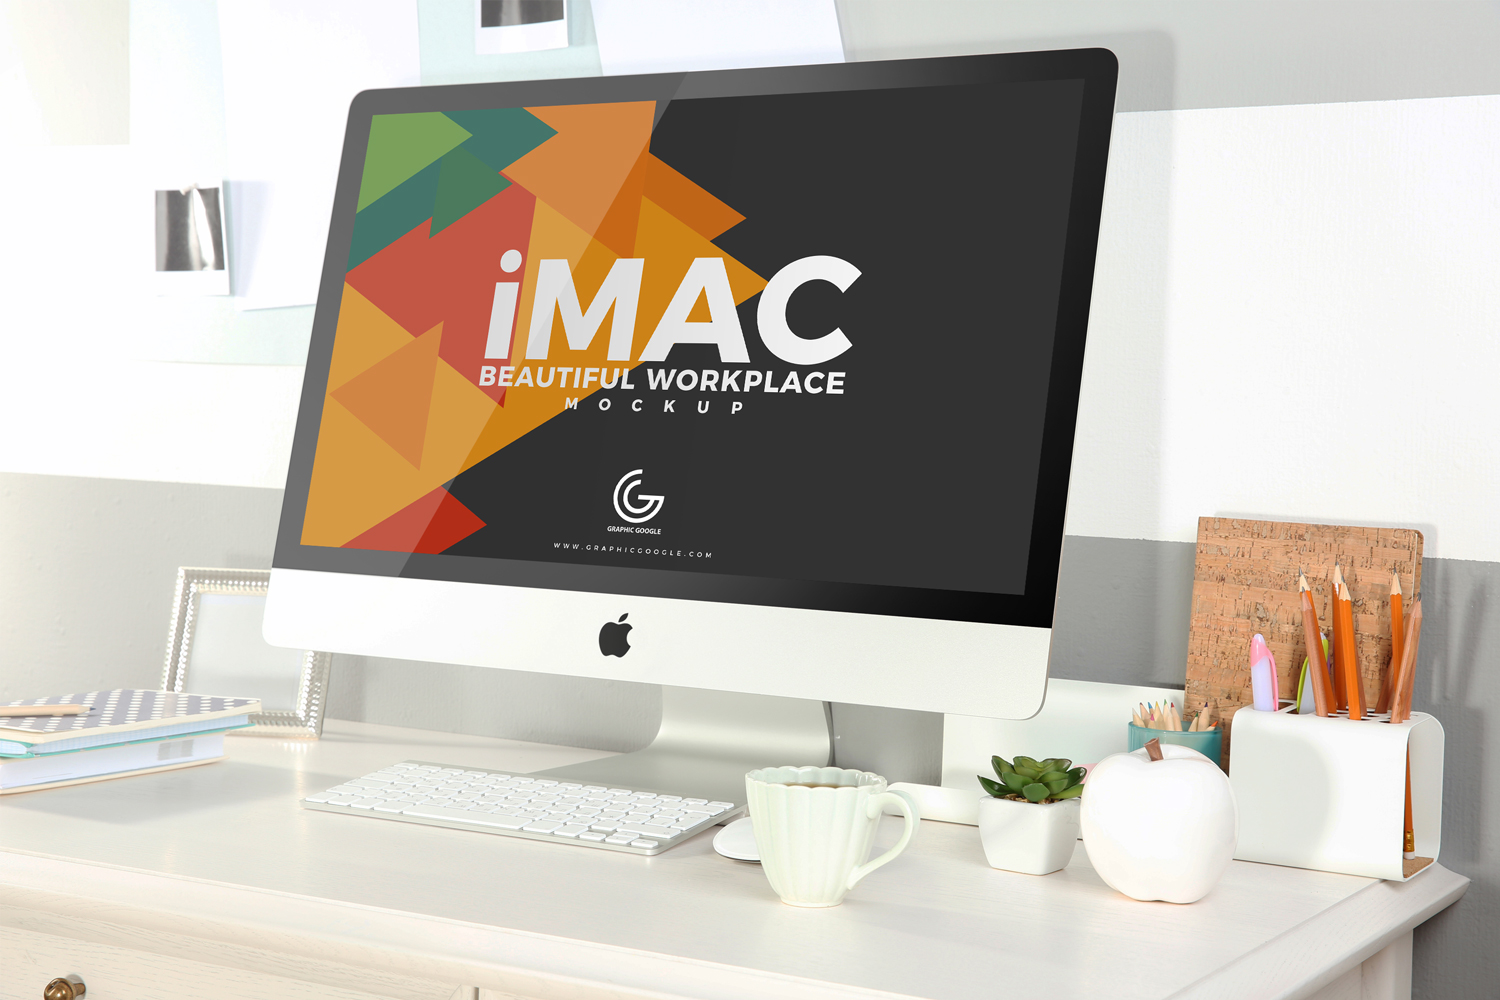 Workplace-iMac-Mockup-2018